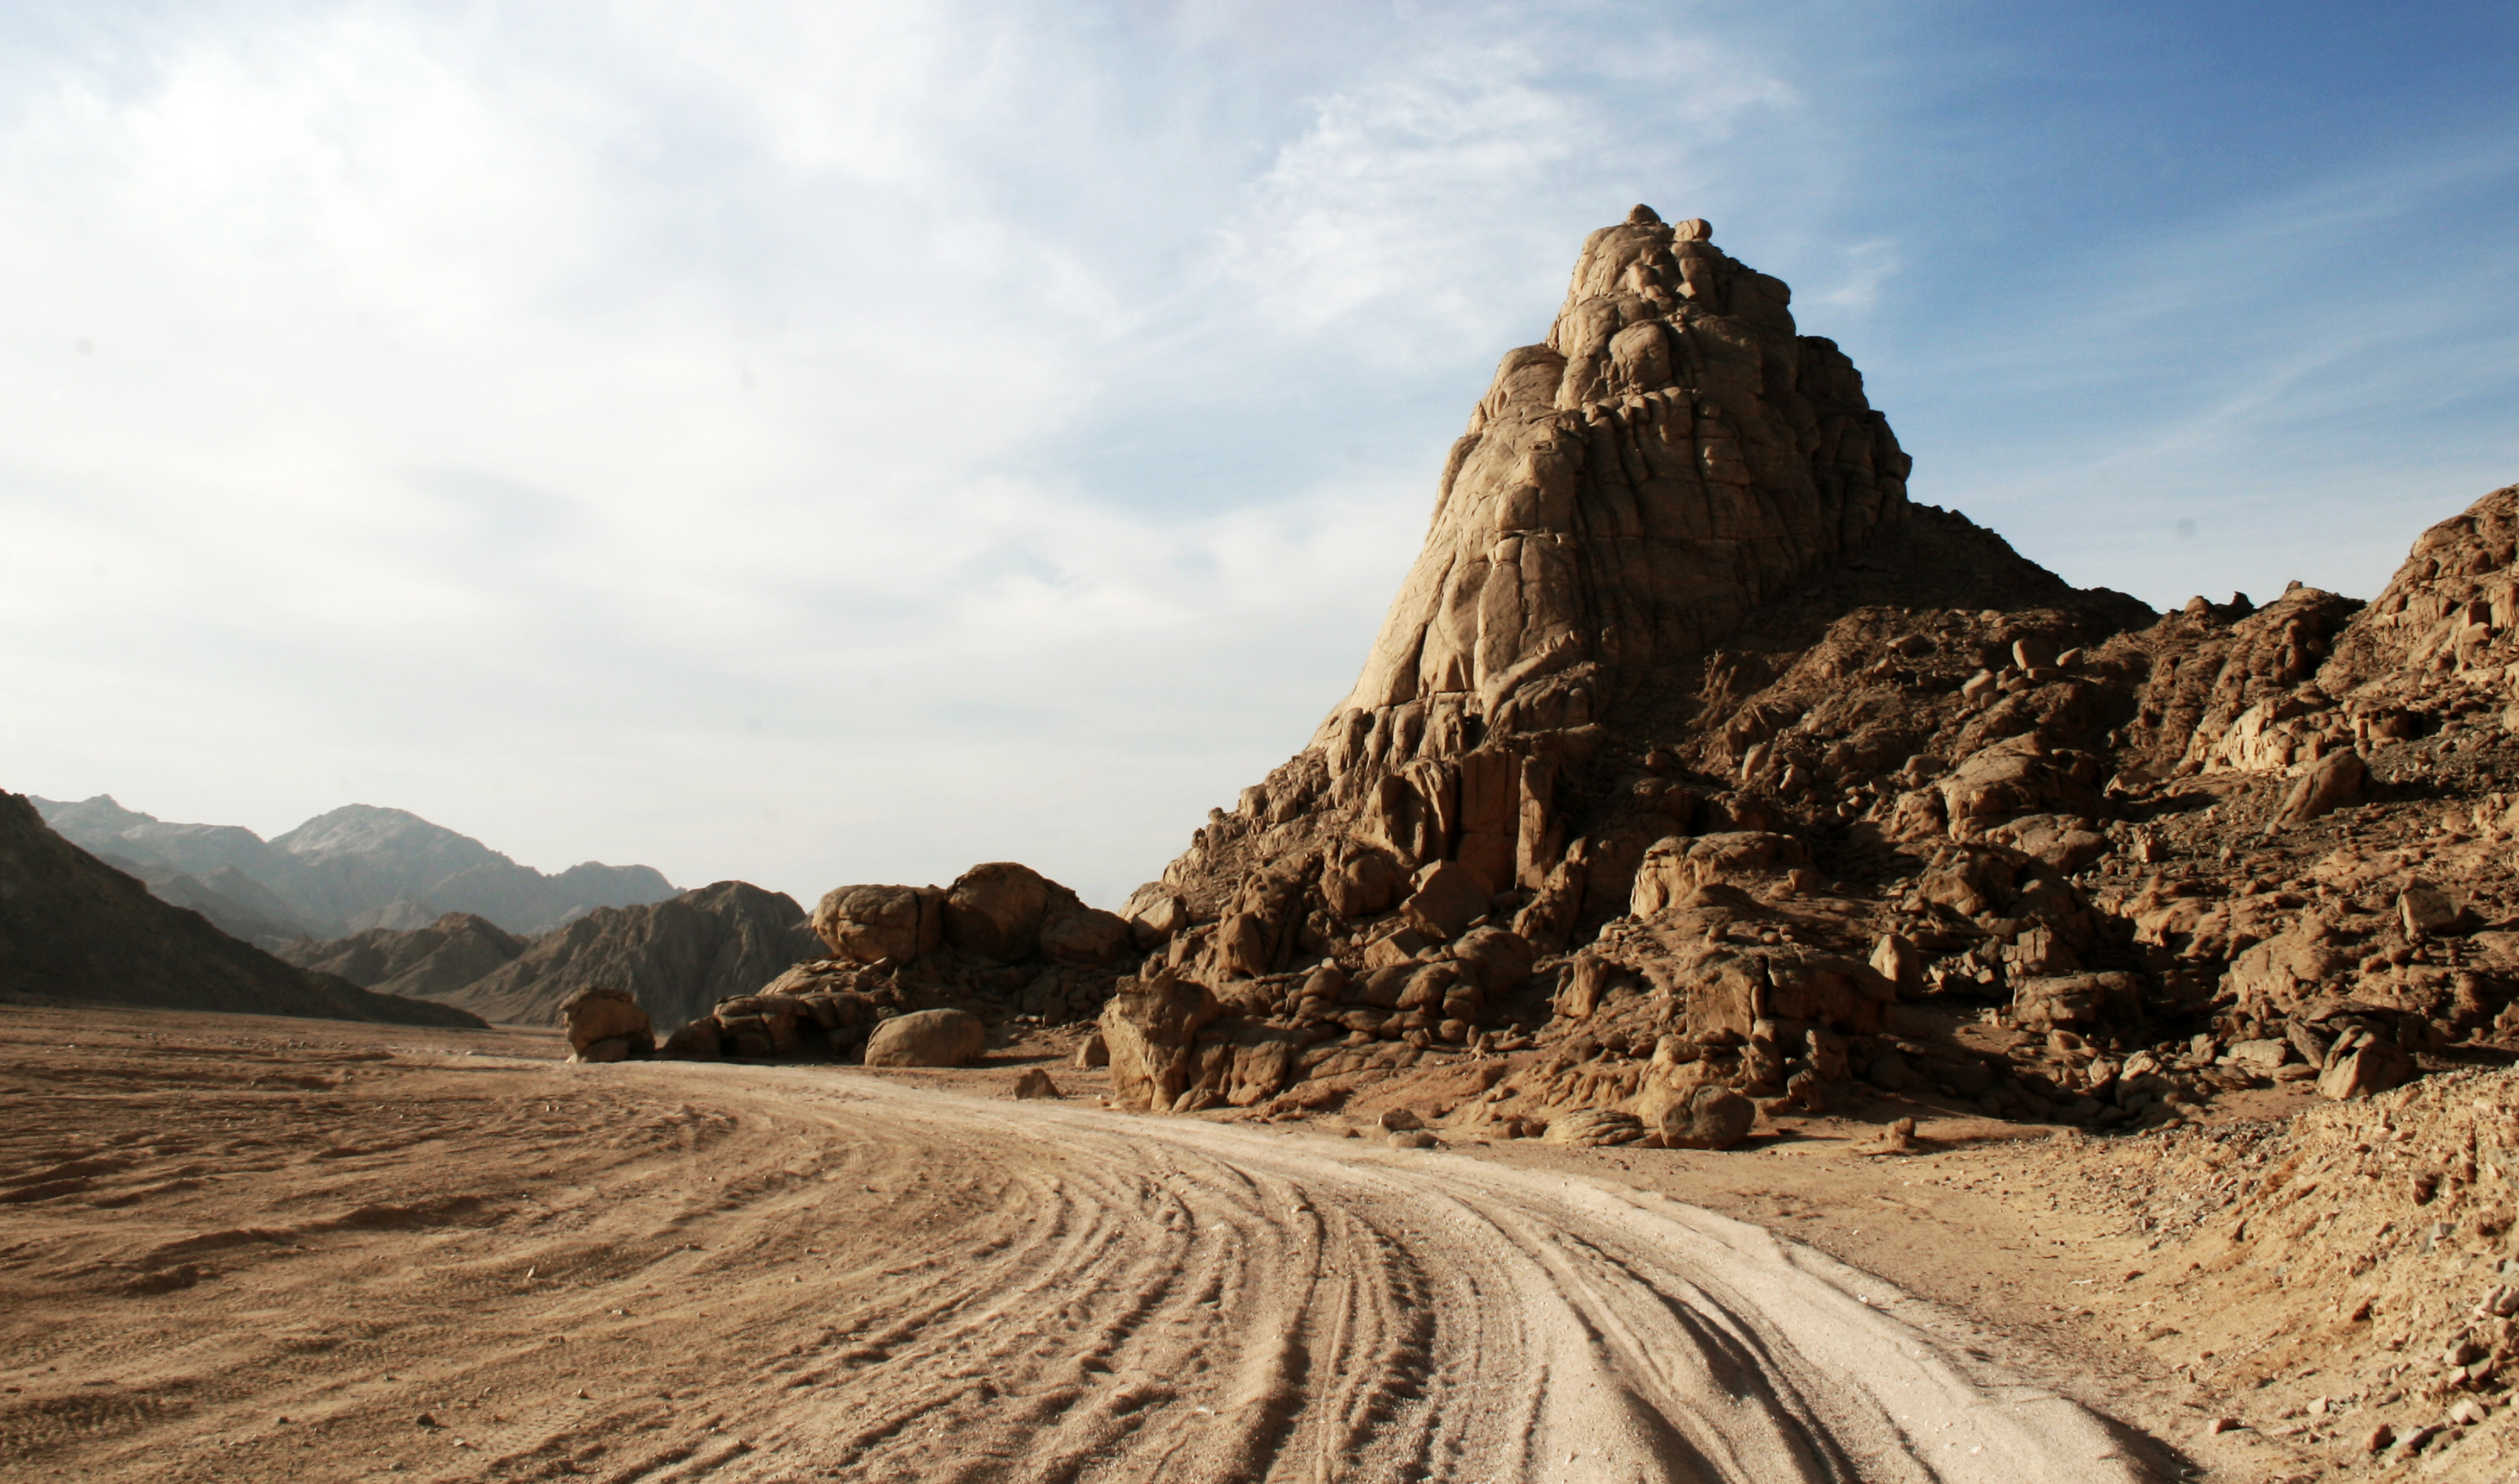 Road through the desert, Car, Desert, Driving, Dry, HQ Photo